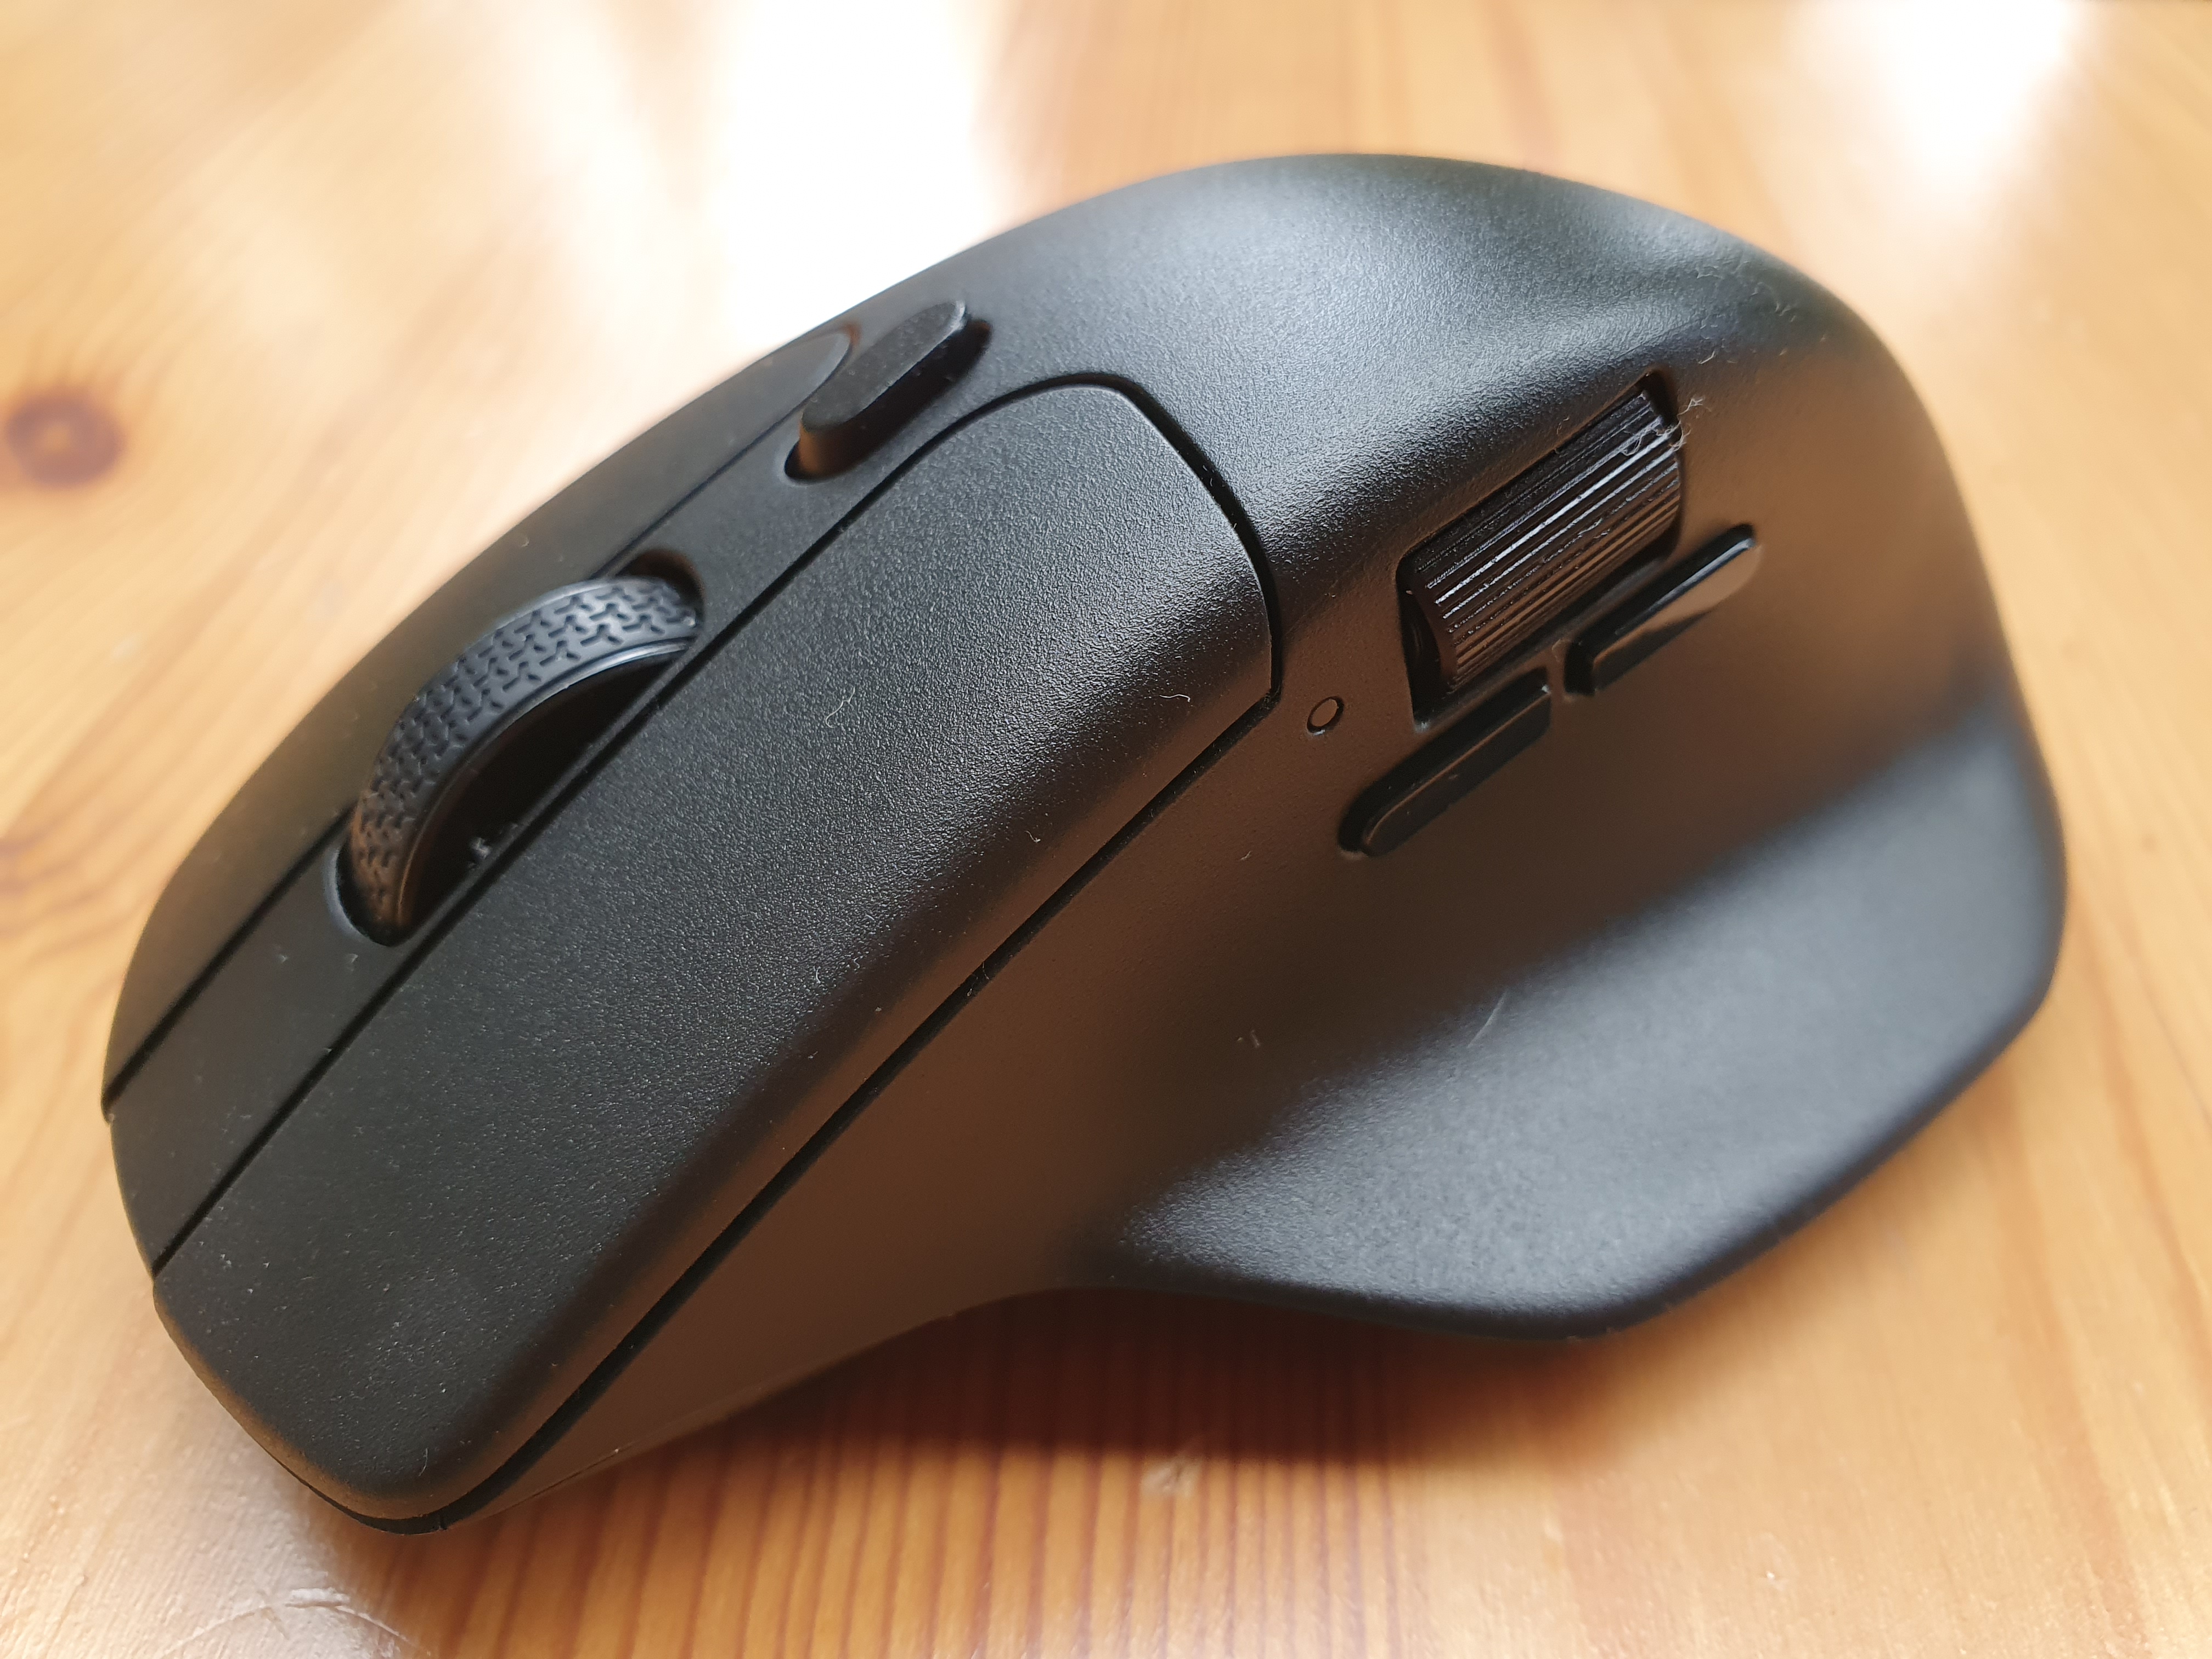 Keychron M6 Wireless - Best wireless gaming mouse